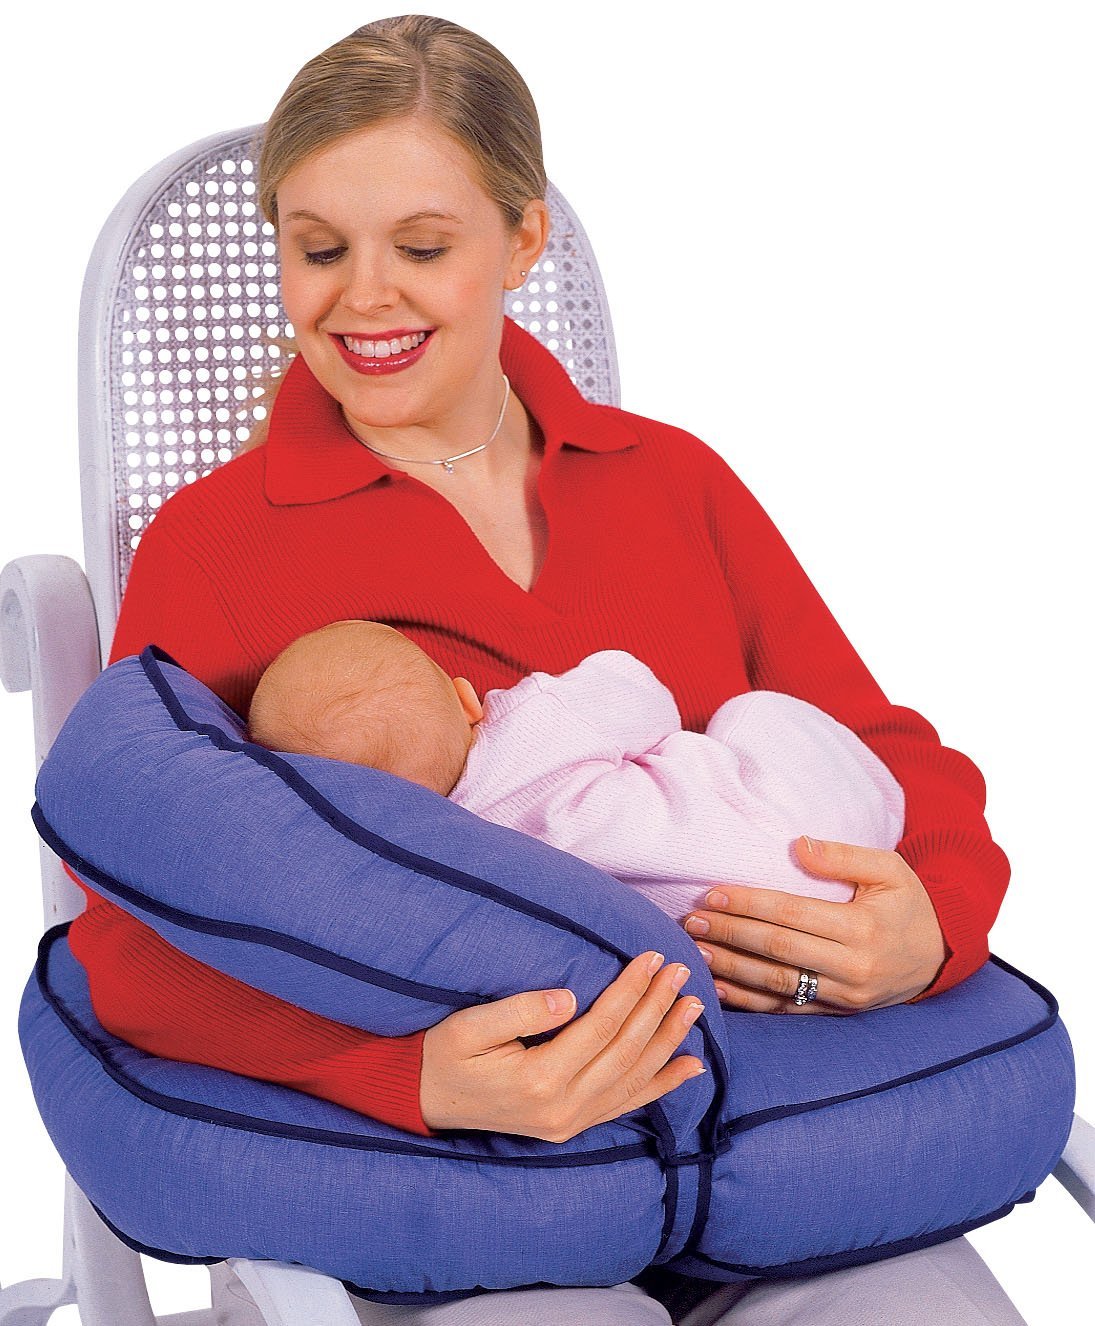 leachco natural boost adjustible nursing pillow, best nursing pillow, nursing pillow, breast feeding pillow, affordable nursing pillow